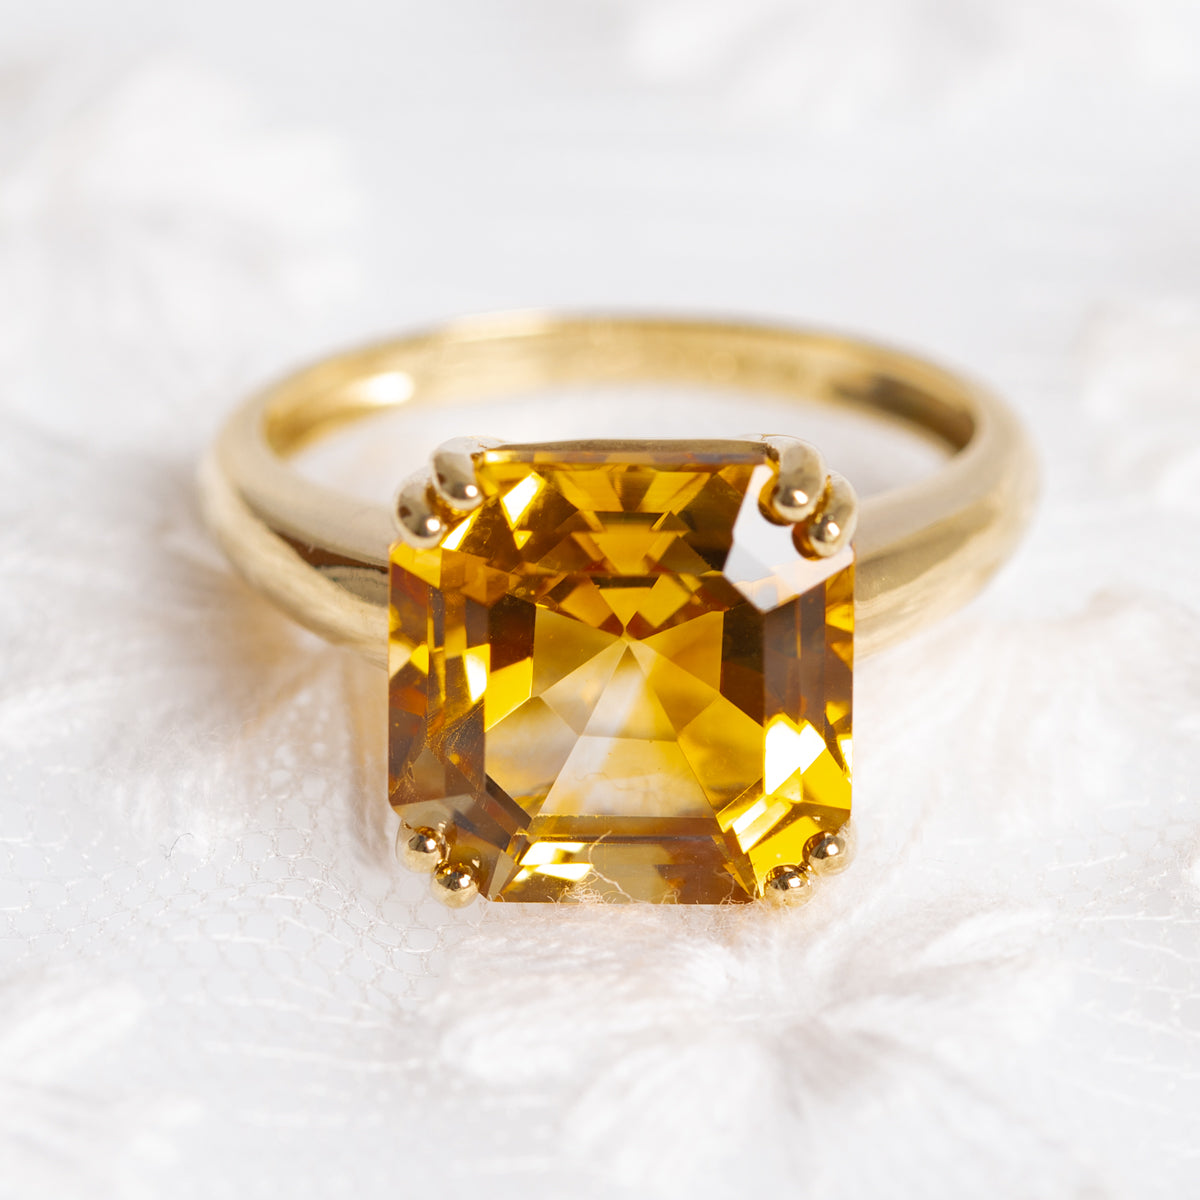 5 Carat Natural Citrine Gemstone Ring In 9ct Gold Square Cut Gem  (A1380)